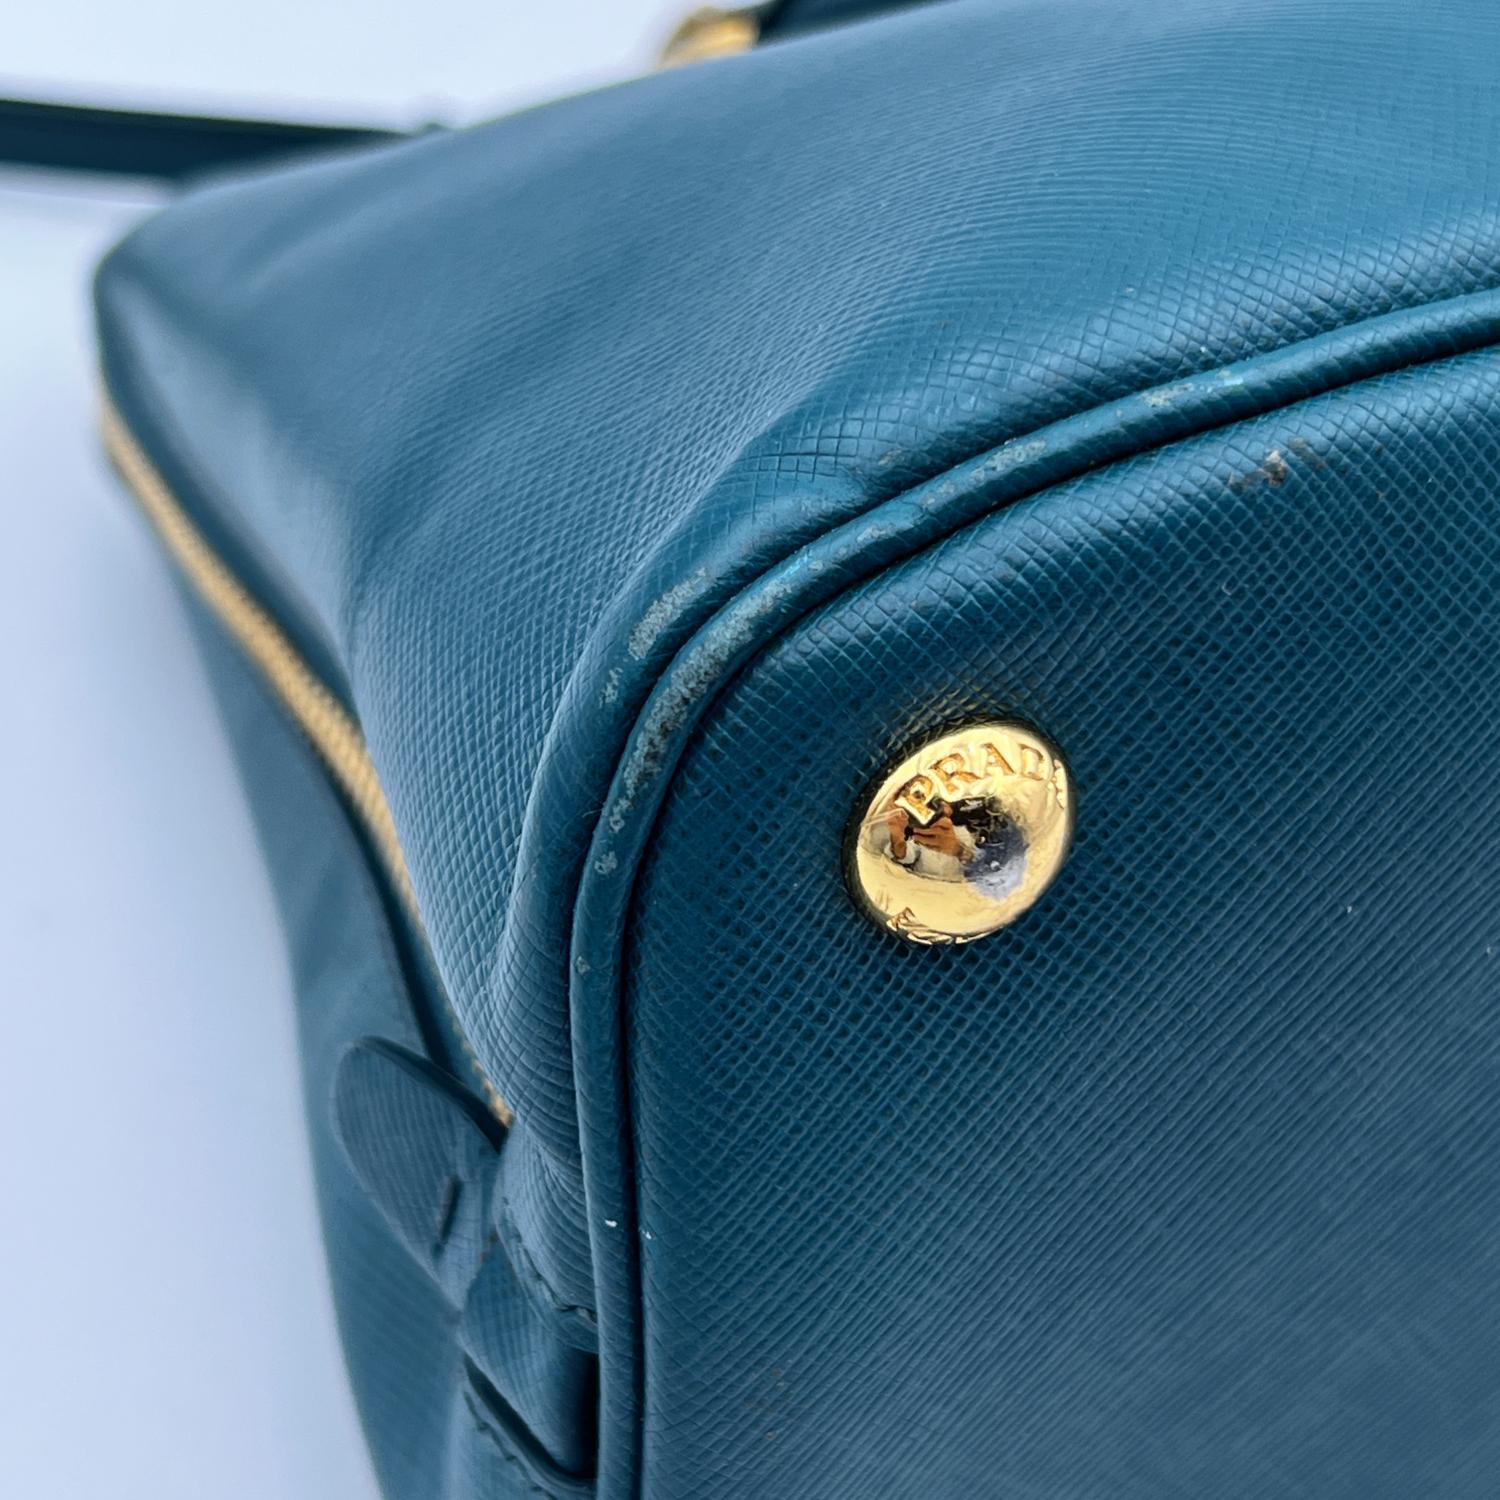 Prada Teal Saffiano Leather Promenade Tote Satchel Bag Handbag 2